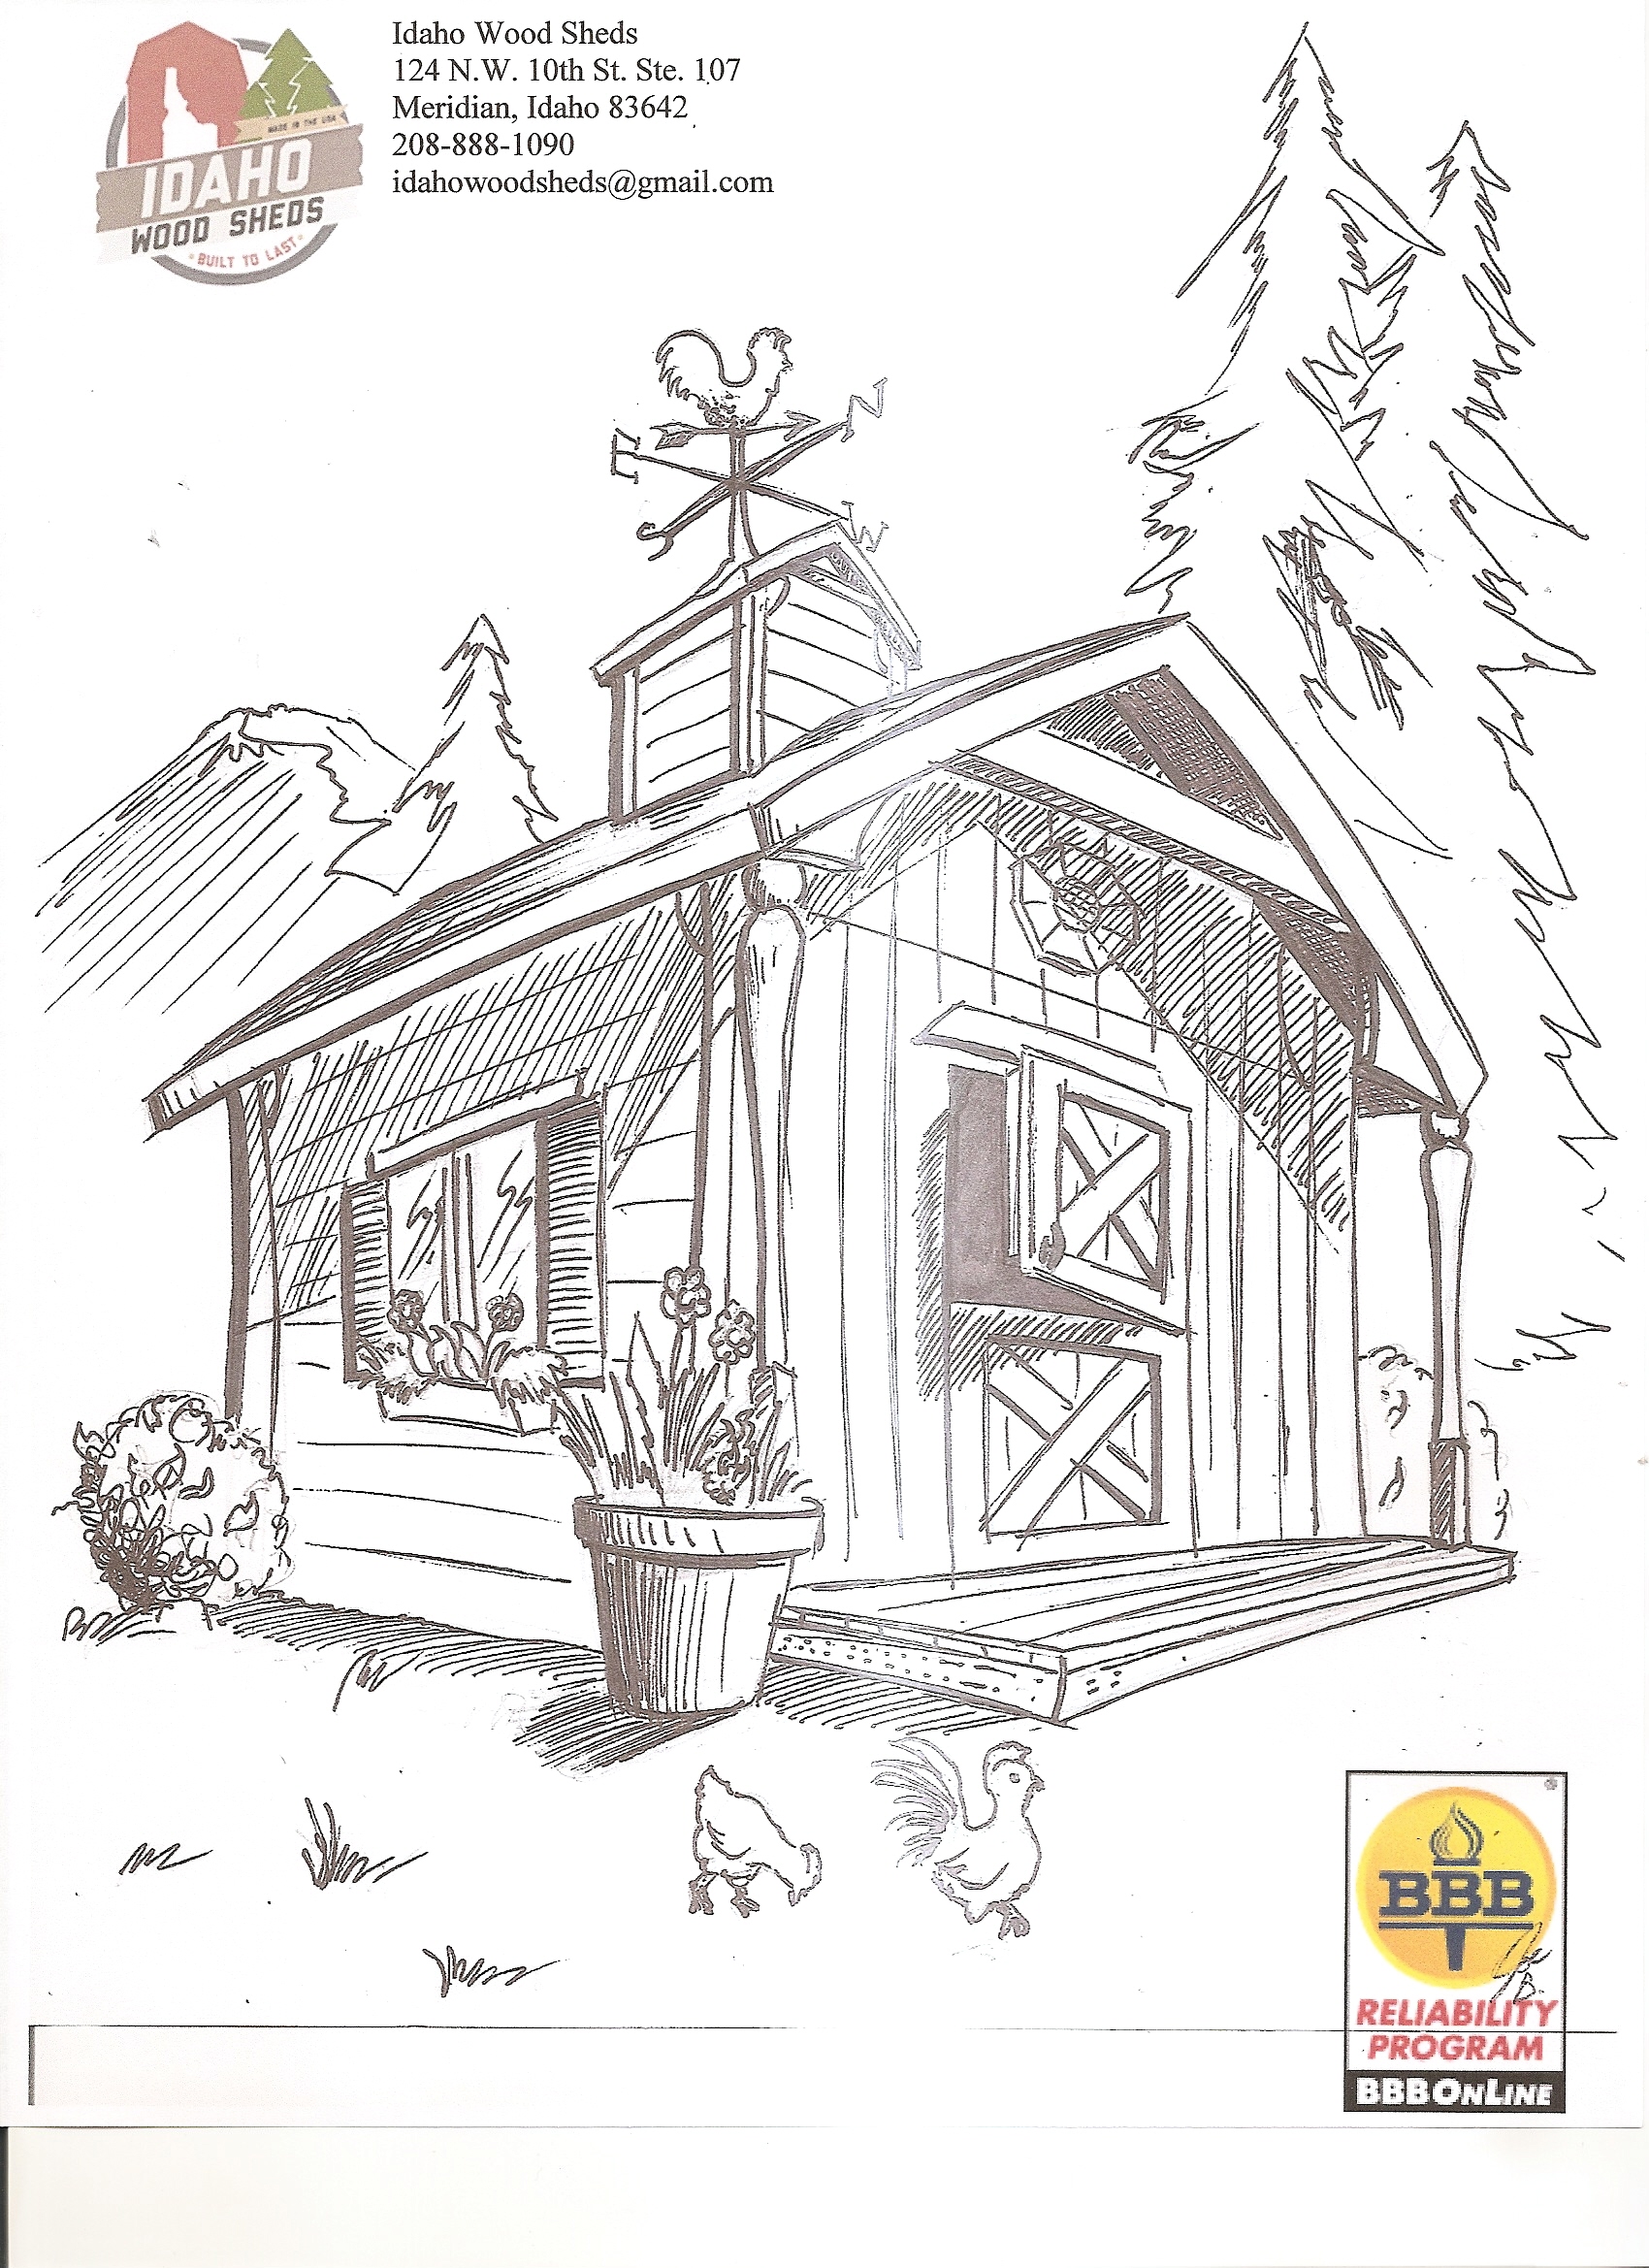 ... Color Page | Outdoor Wood Storage Sheds - Boise |Idaho Wood Sheds